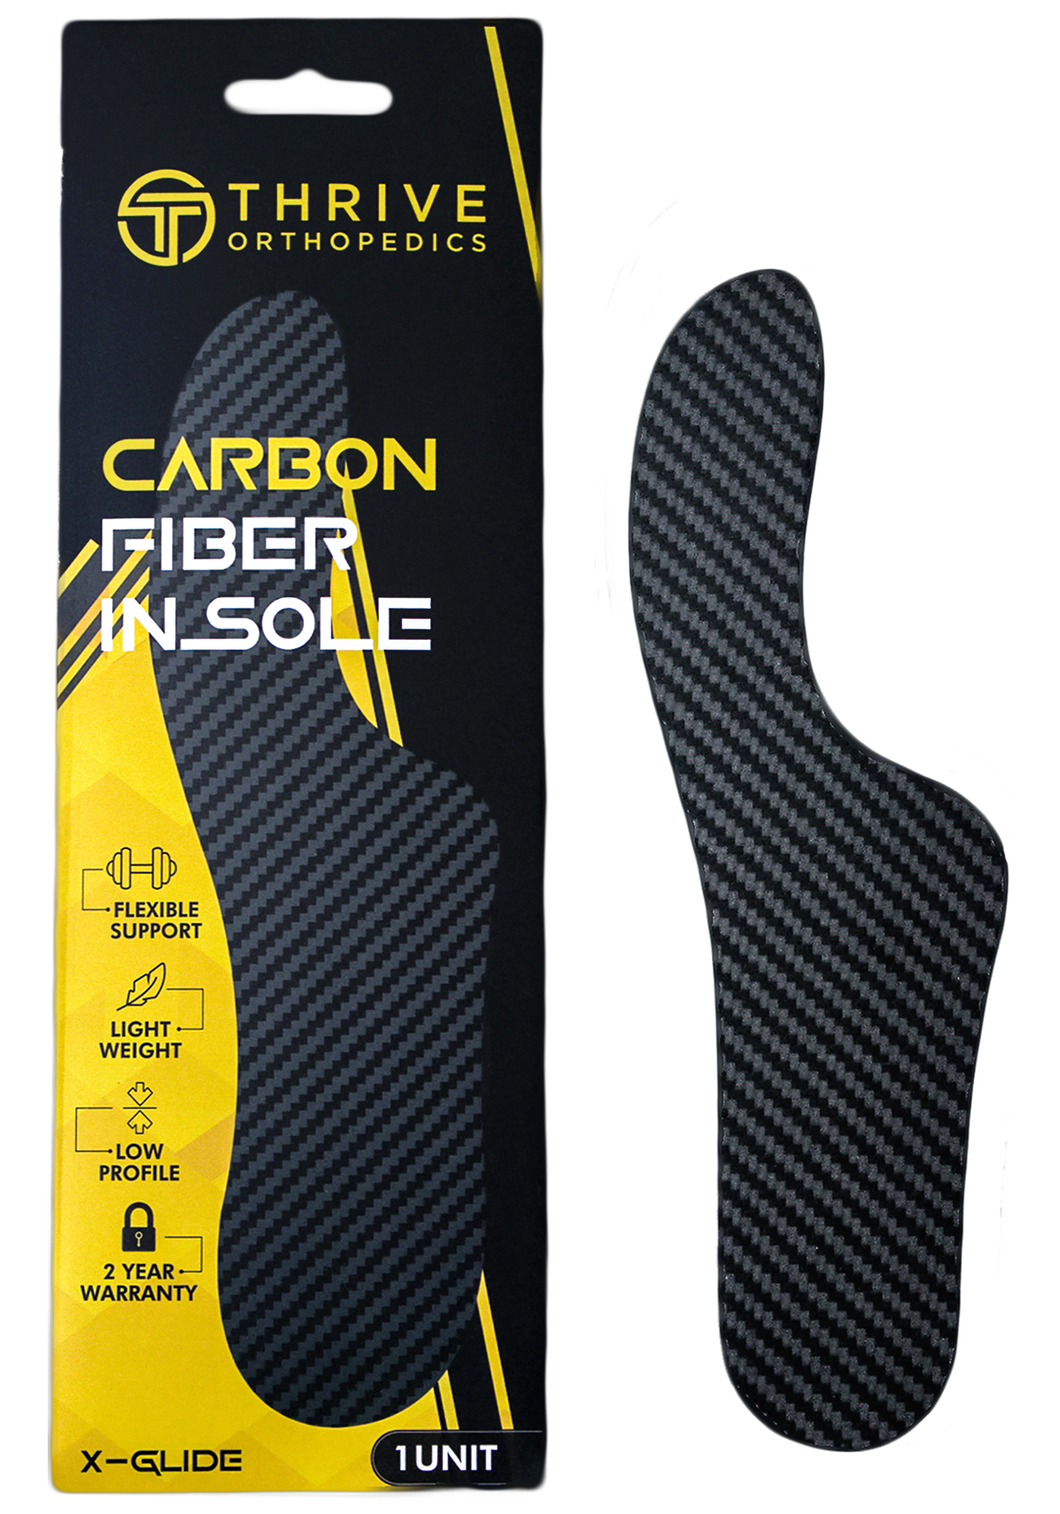 X-Glide Morton's Extension Flexible Carbon Fiber Insoles